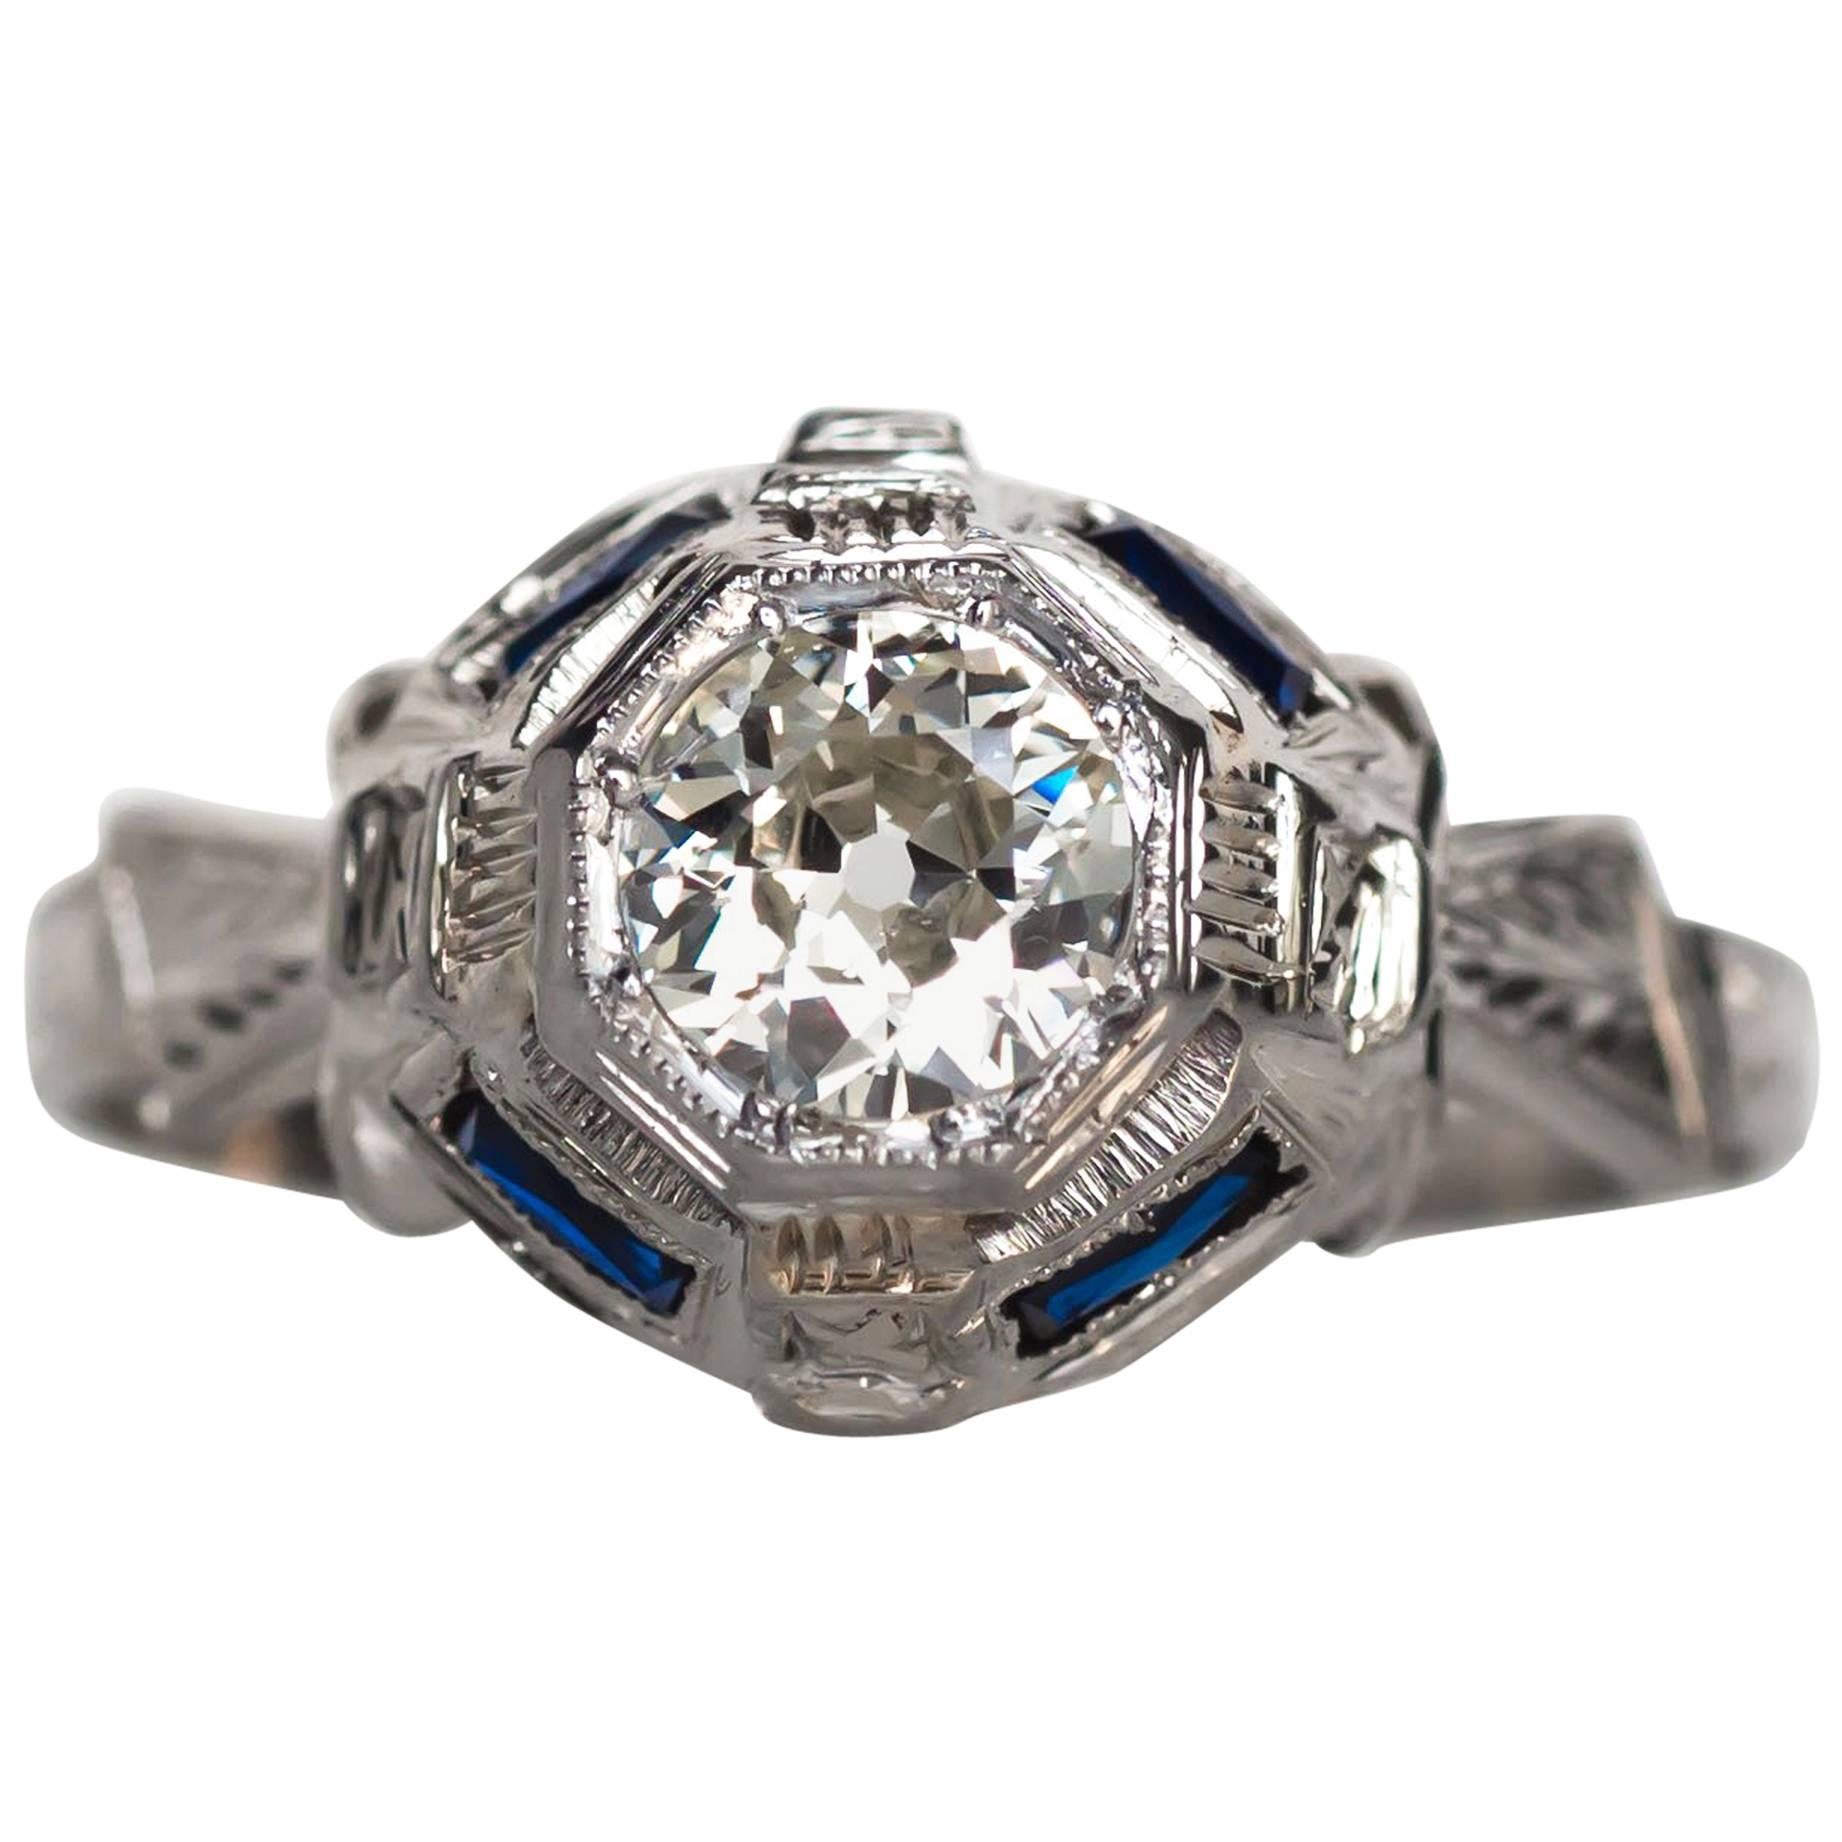 1930s Art Deco GIA Certified .60 Carat Diamond White Gold Engagement Ring